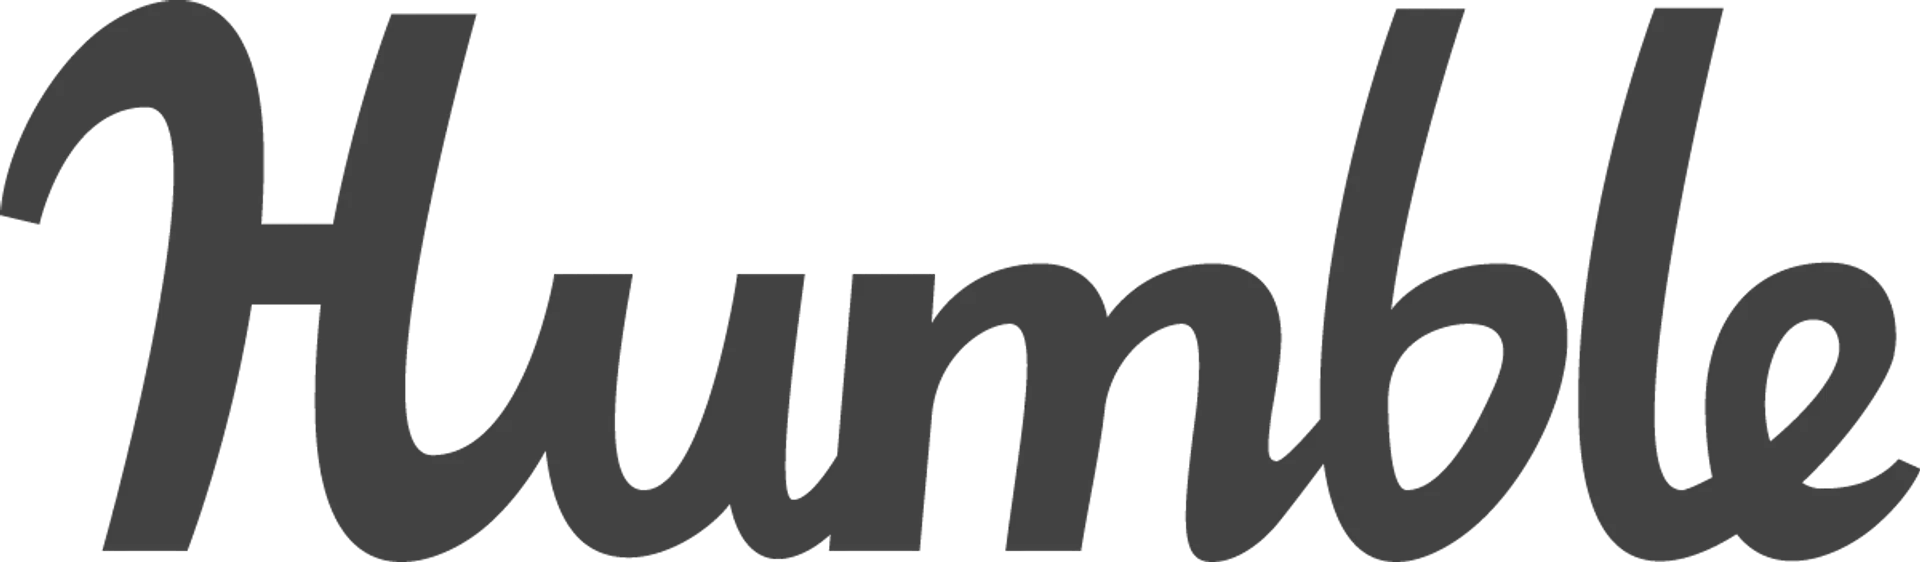 HUMBLE BUNDLE logo